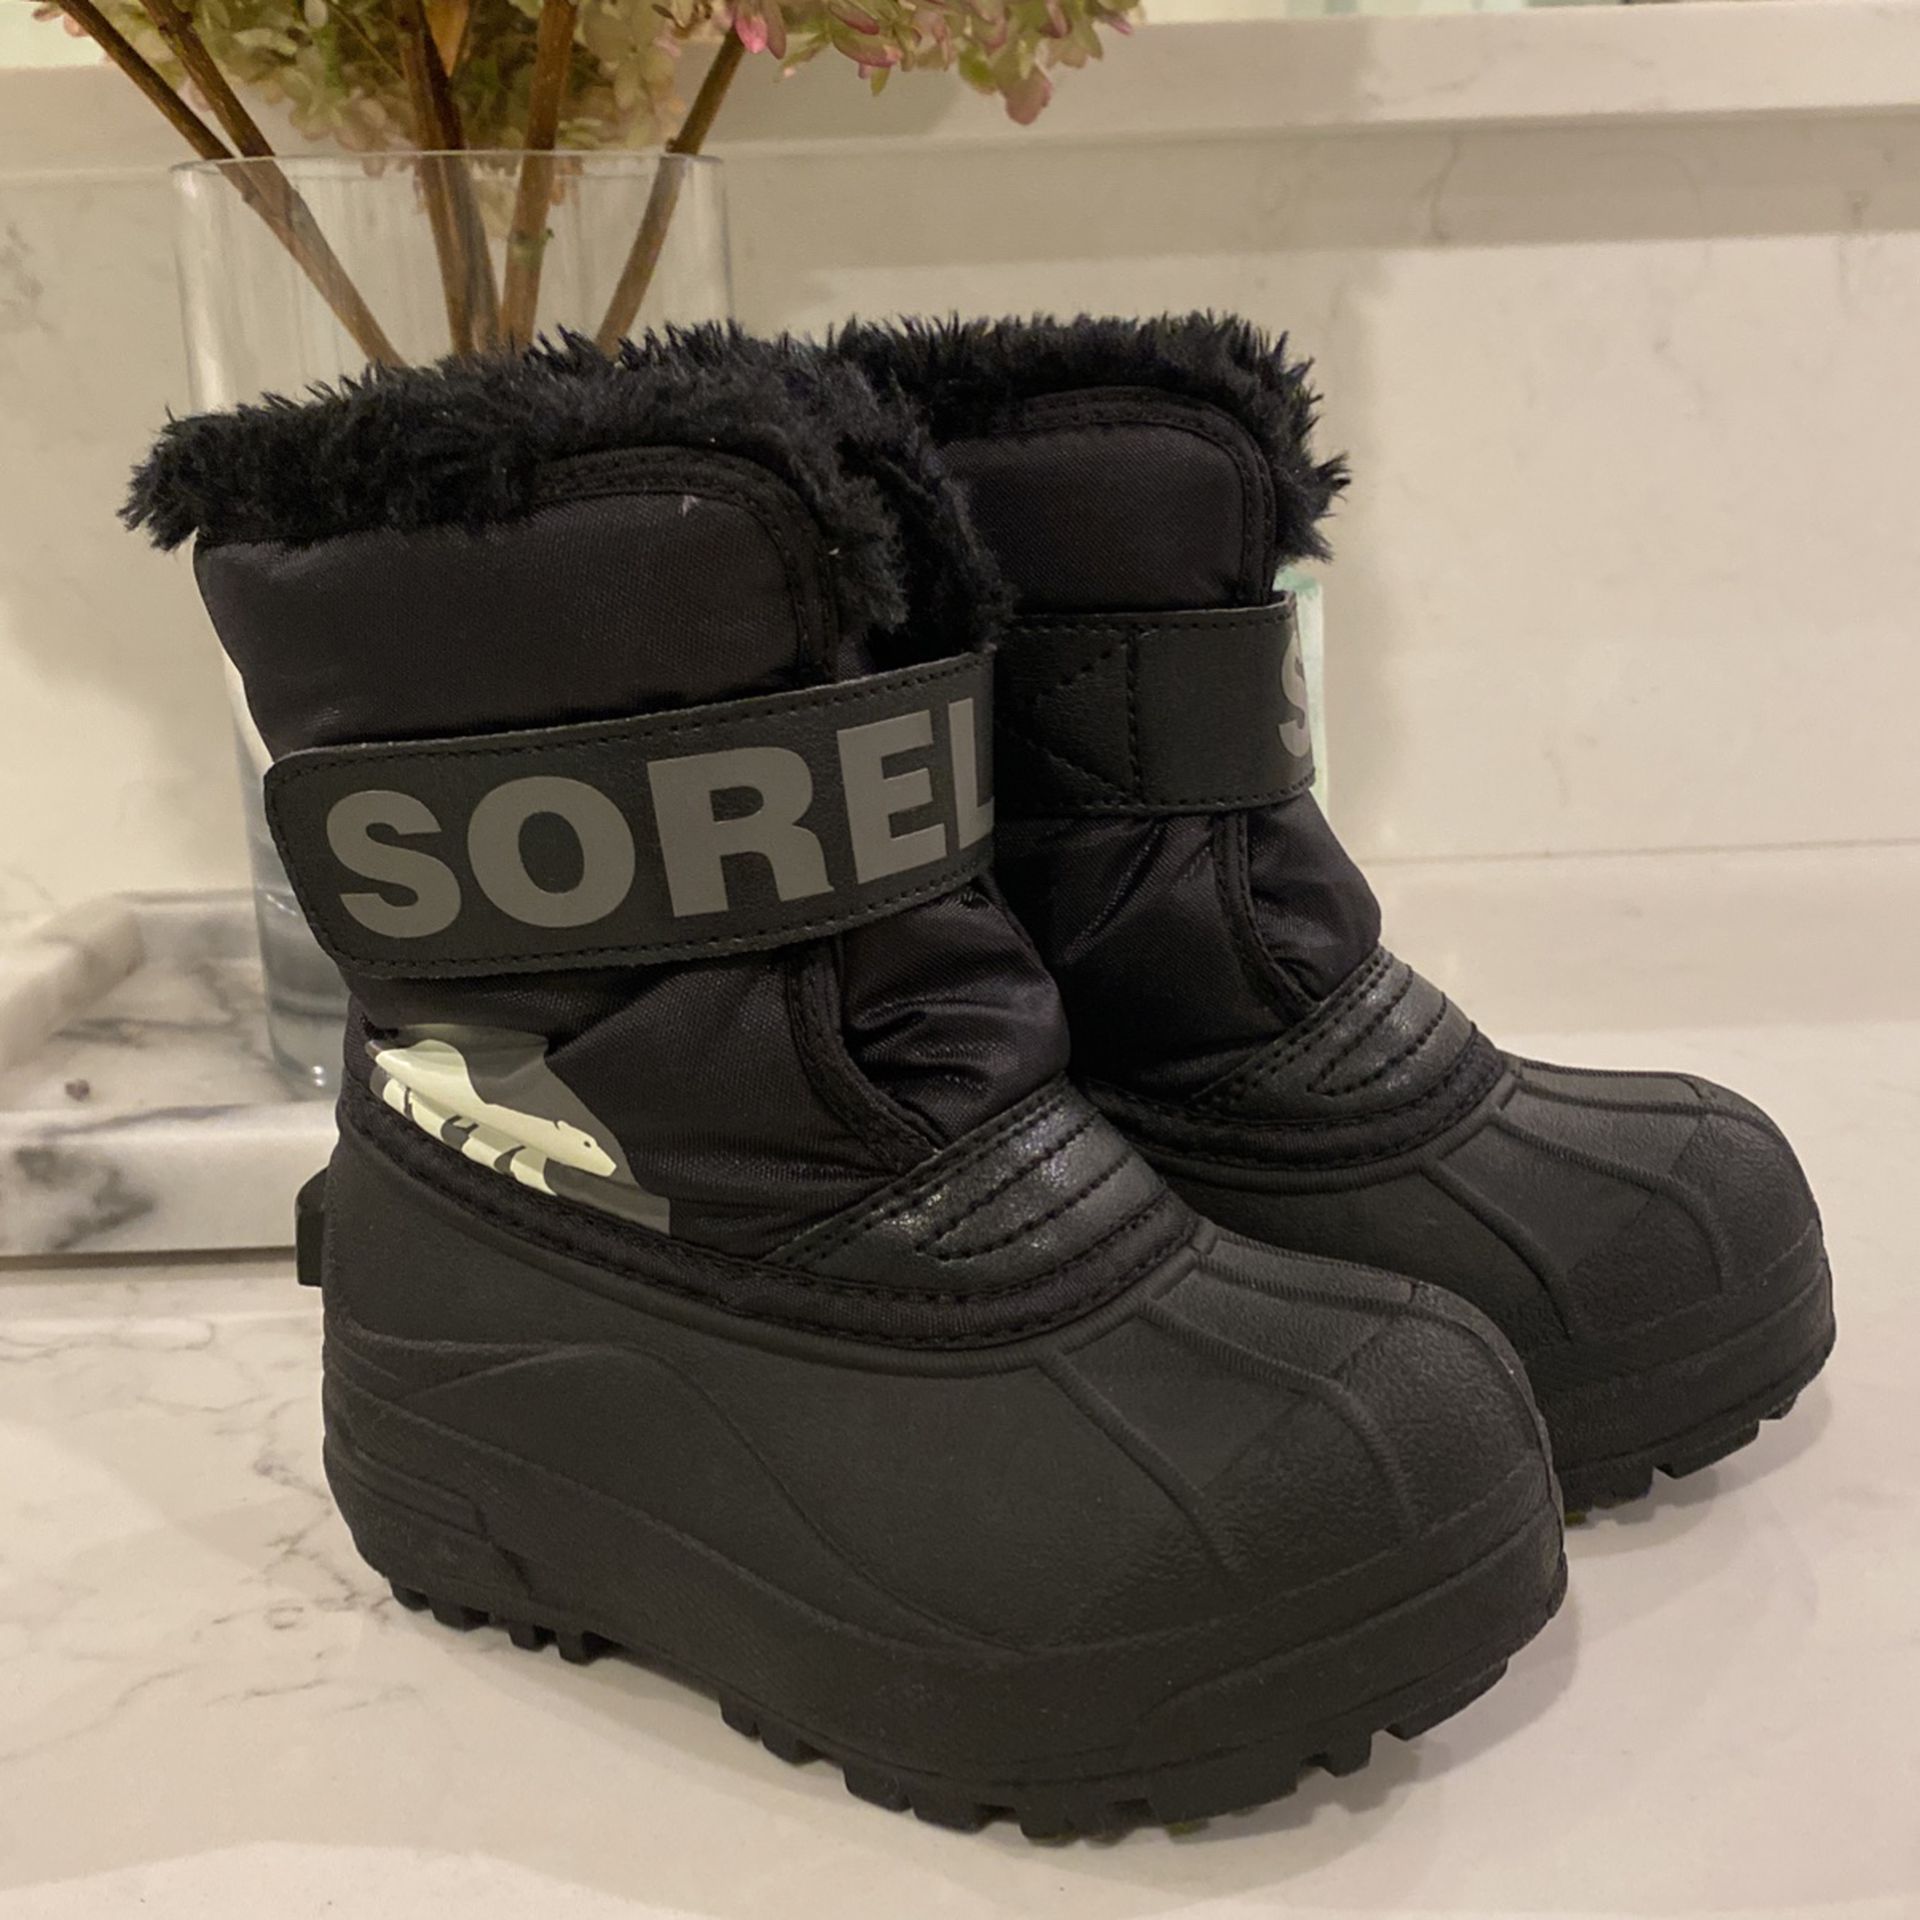 Sorel Snow boots Size 9